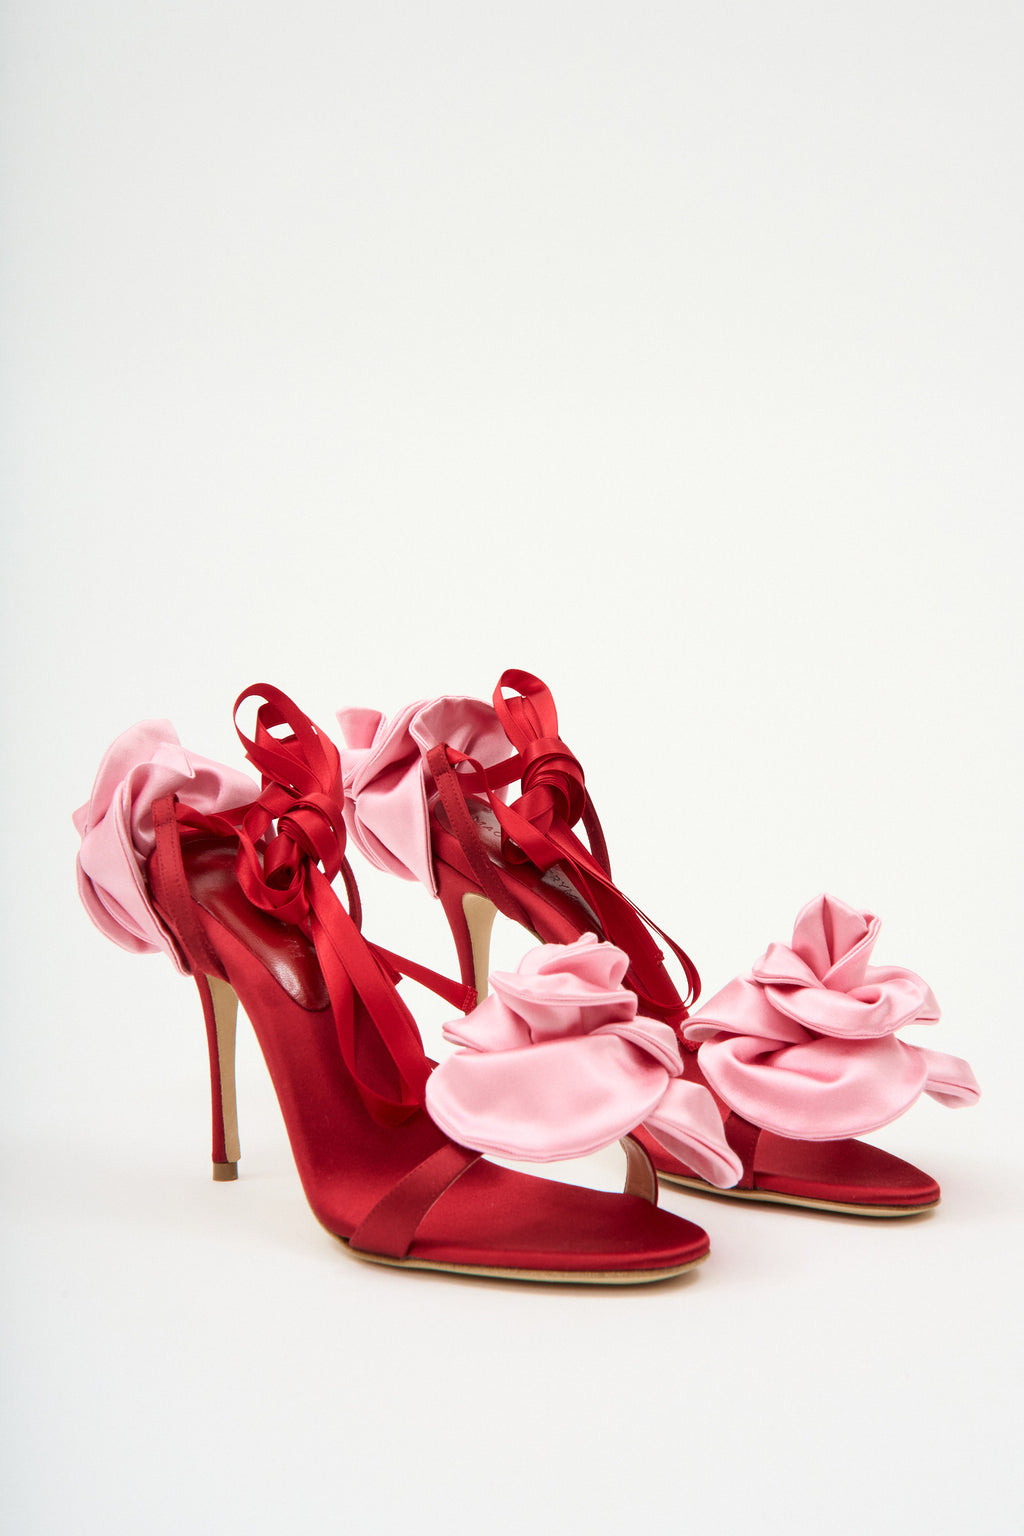 Double Flower Pink Red Satin Heel Sandals